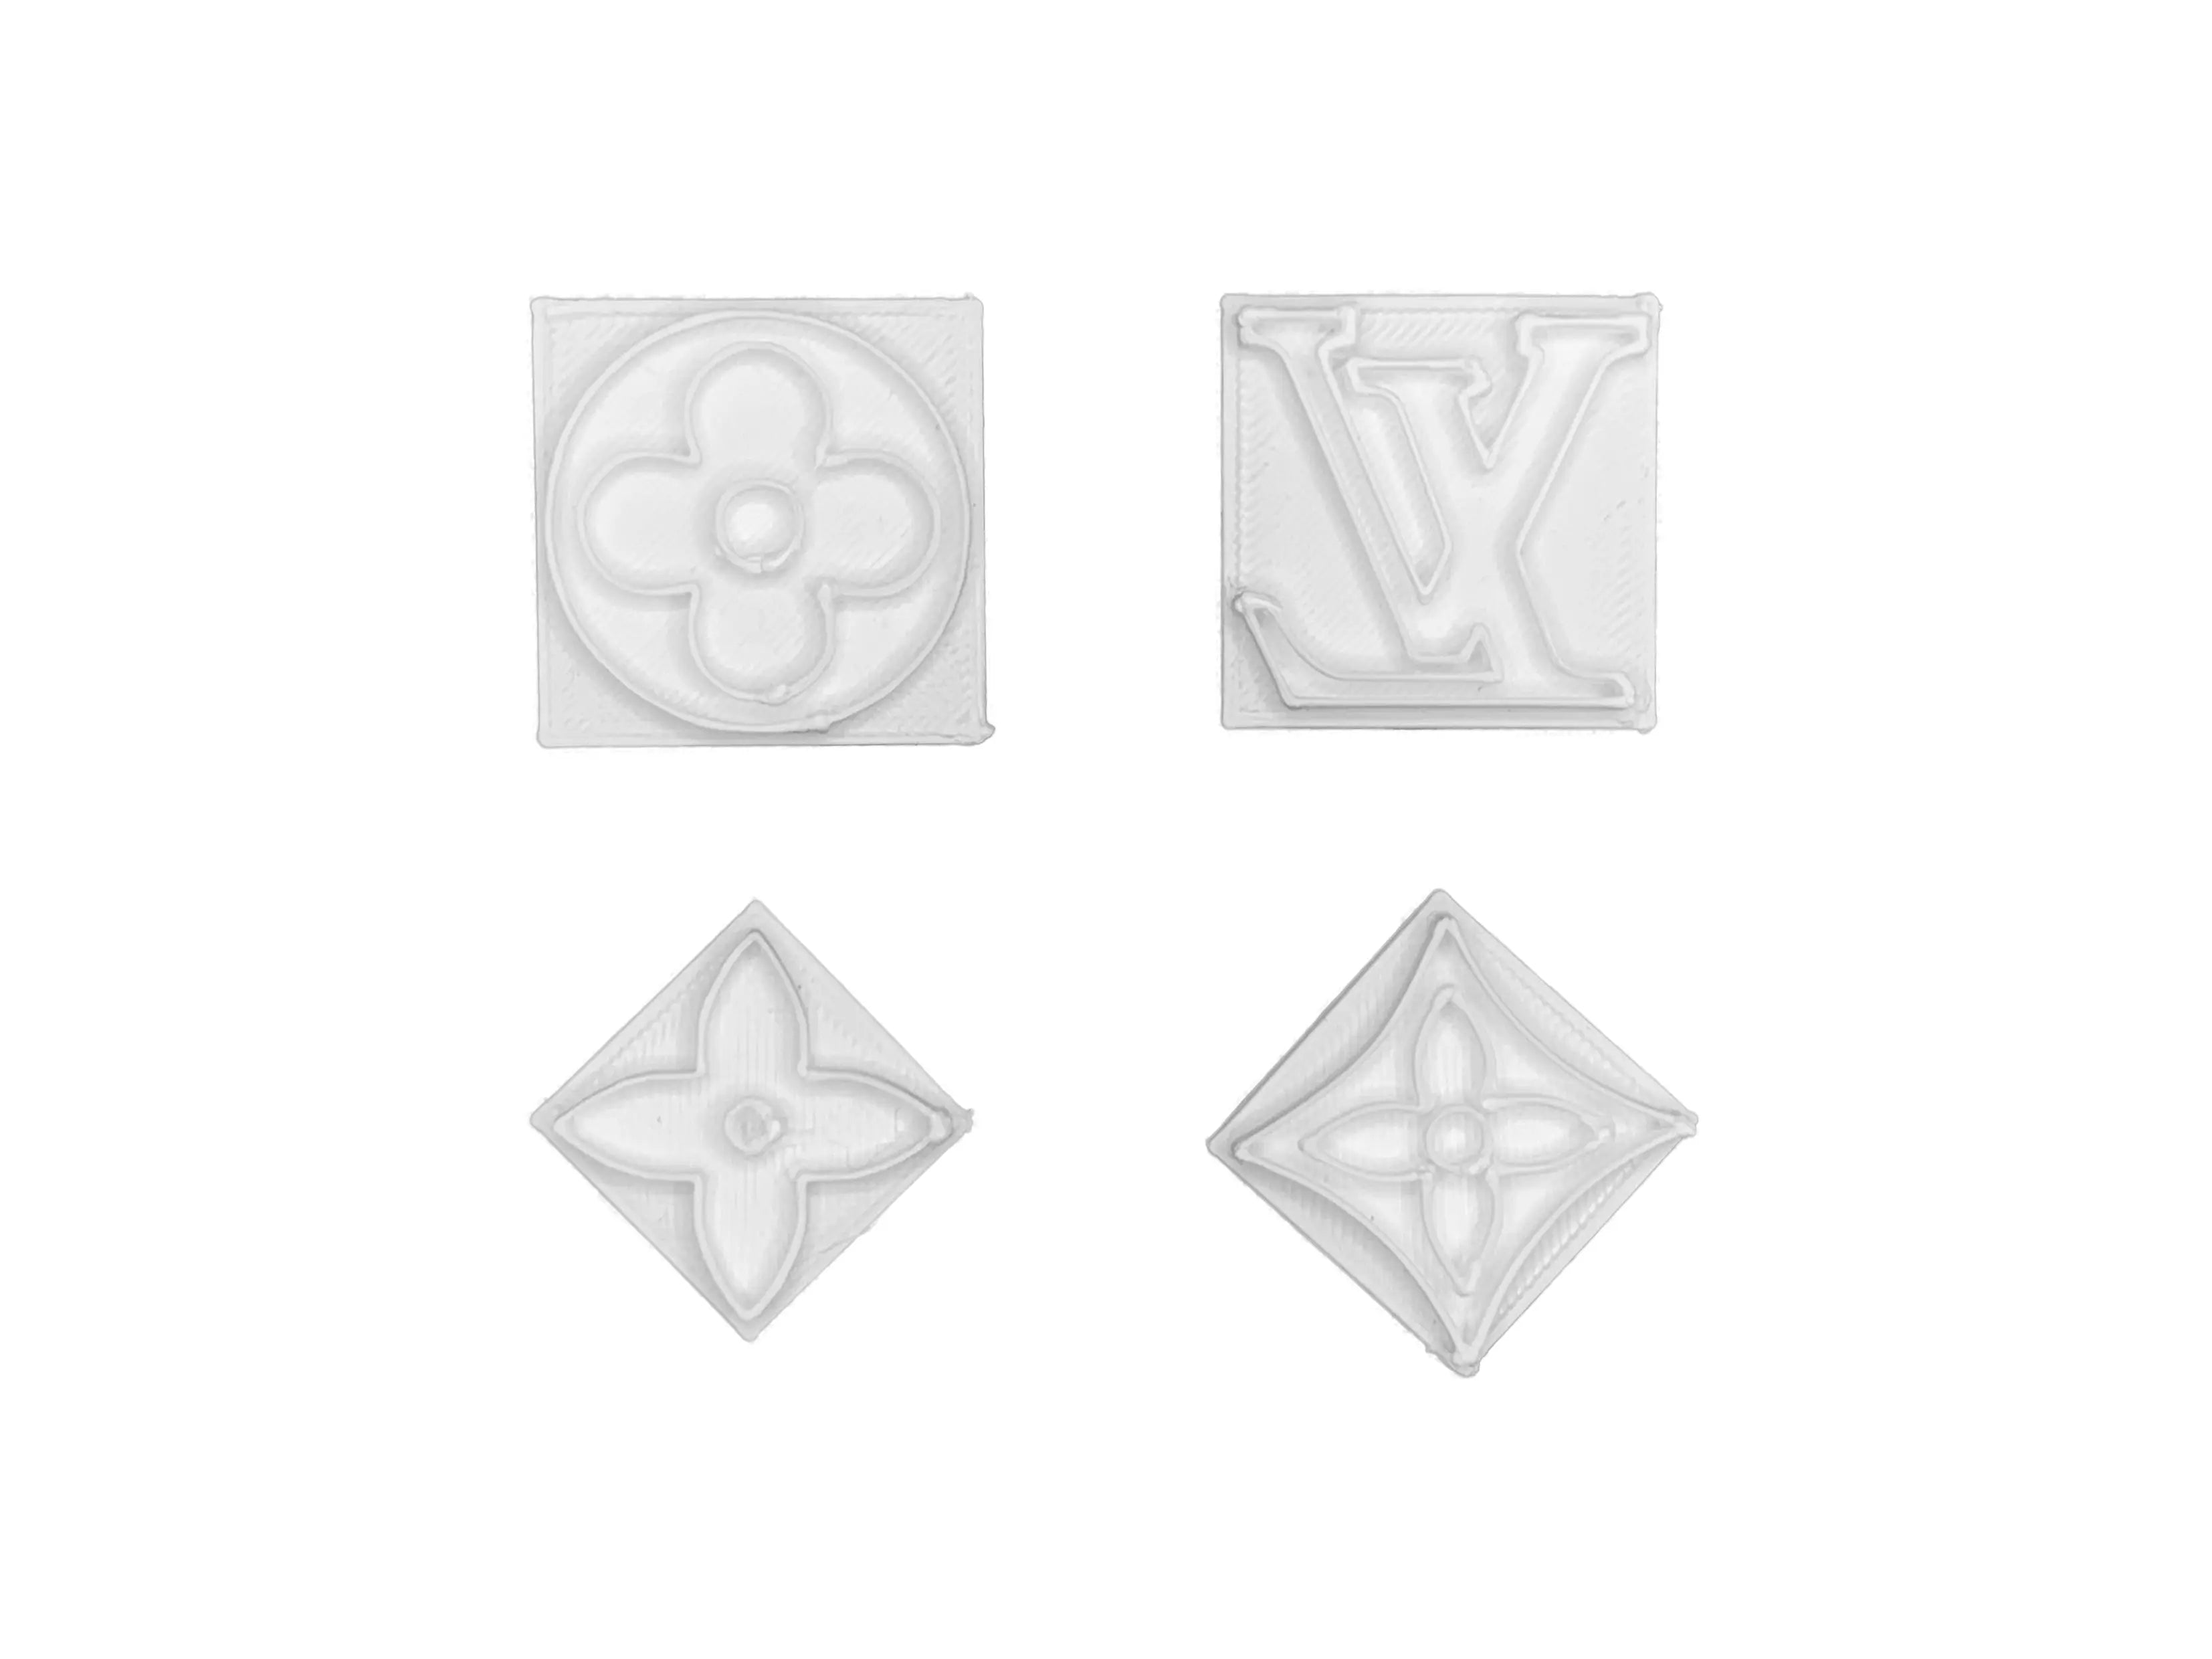 O'Creme Louis Vuitton Symbol Gumpaste Cutters, Set of 5 Assorted